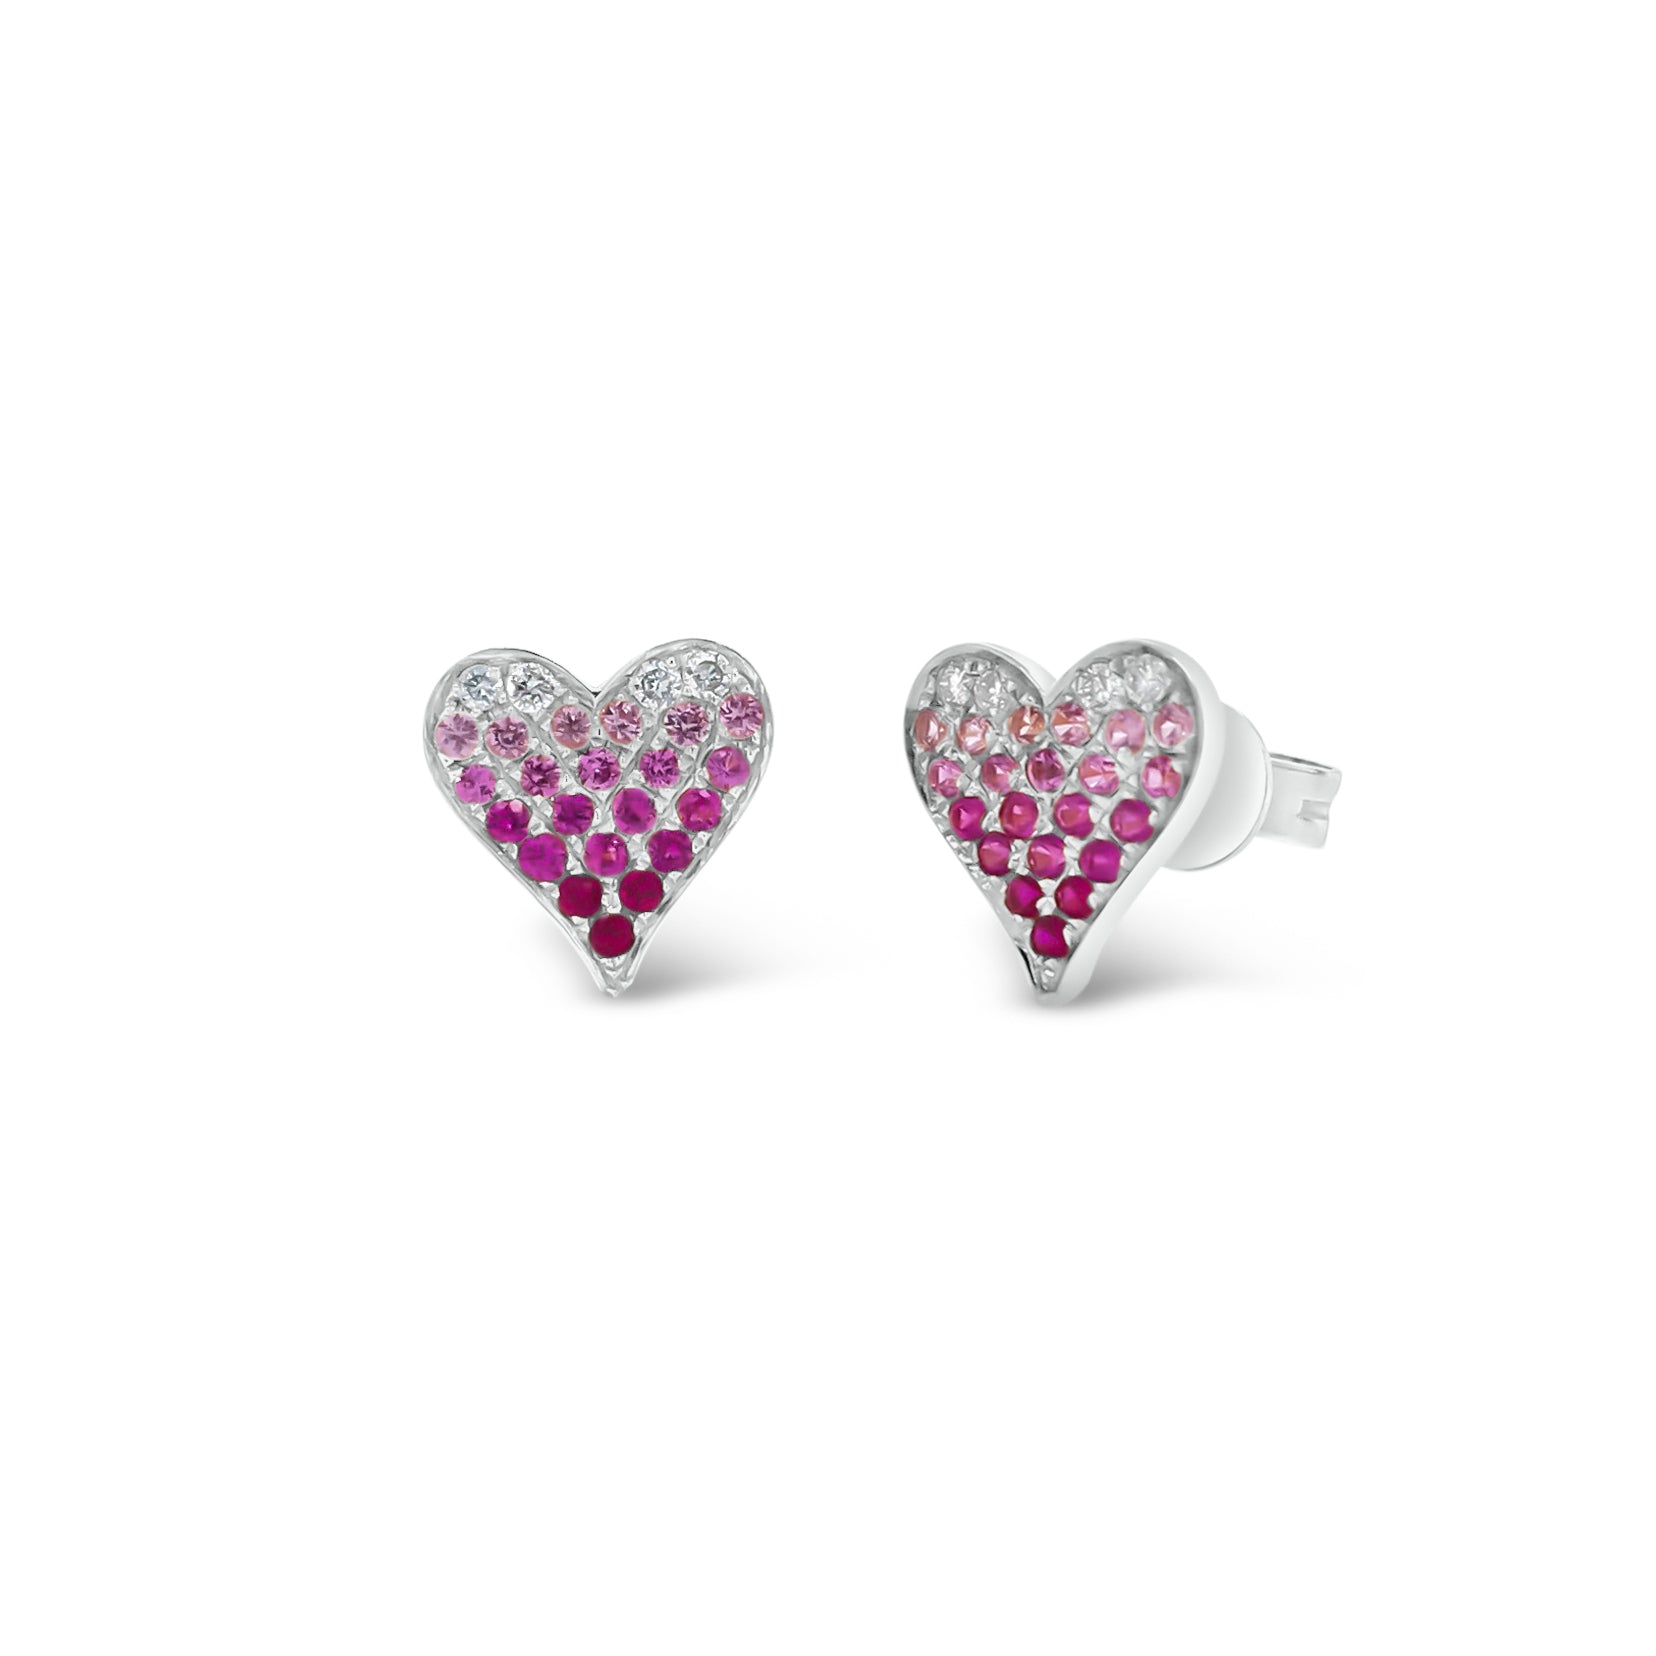 Pink Sapphire & Diamond Heart Stud Earrings - 14k rose gold weighing 1.99 grams - 0.56 total carat weight (pink sapphires) - 0.09 total carat weight (diamonds)